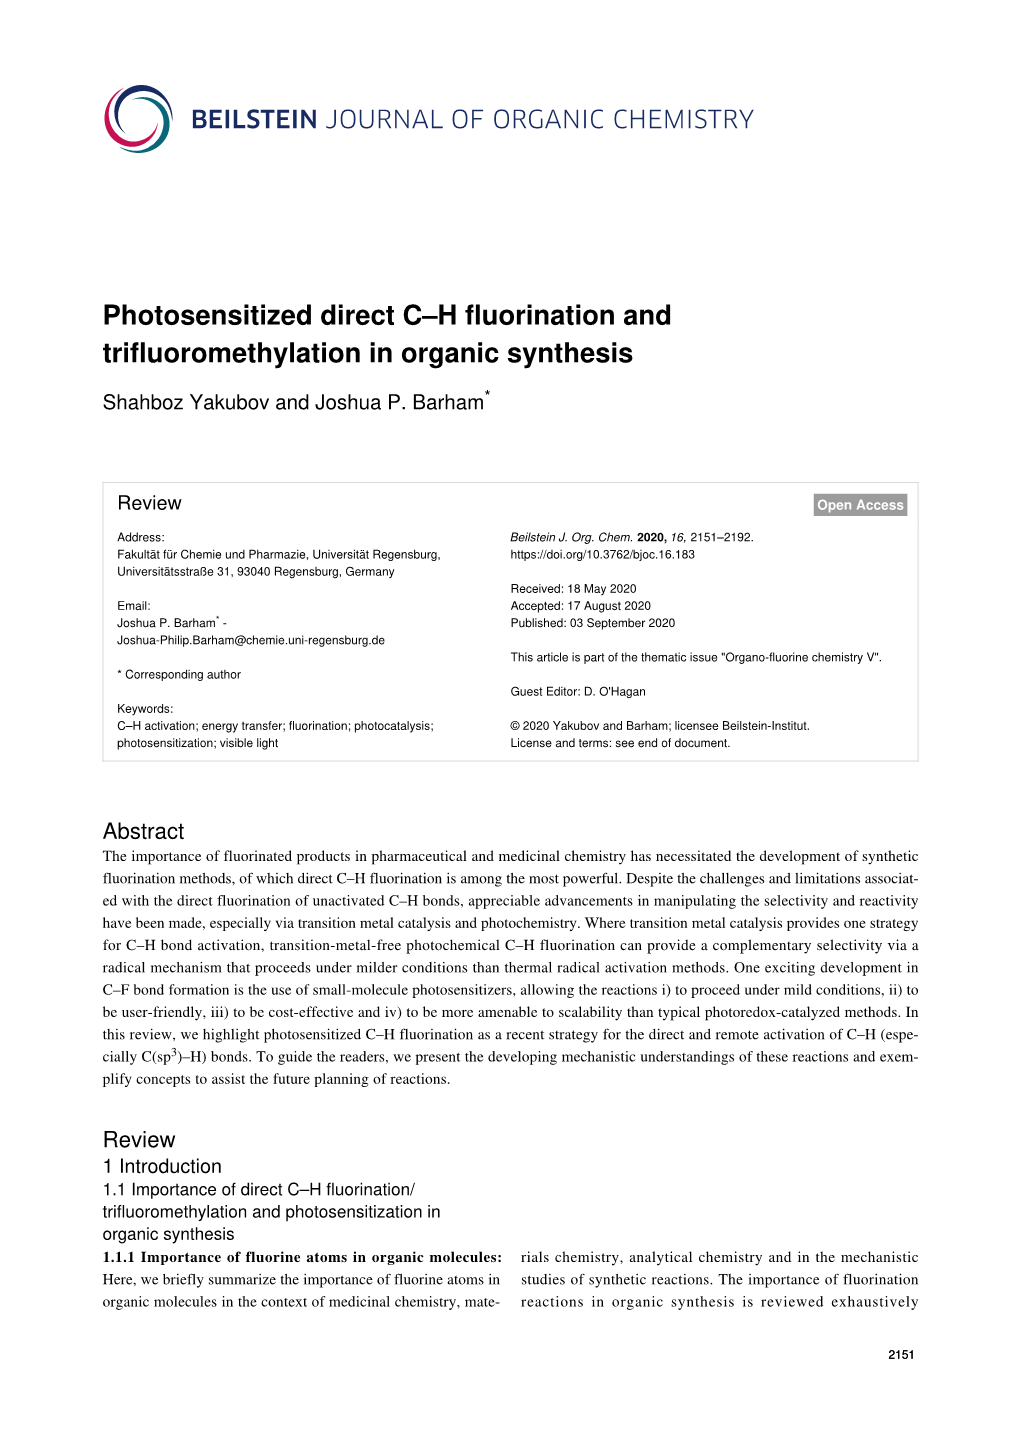 Photosensitized Direct C–H Fluorination and Trifluoromethylation in Organic Synthesis